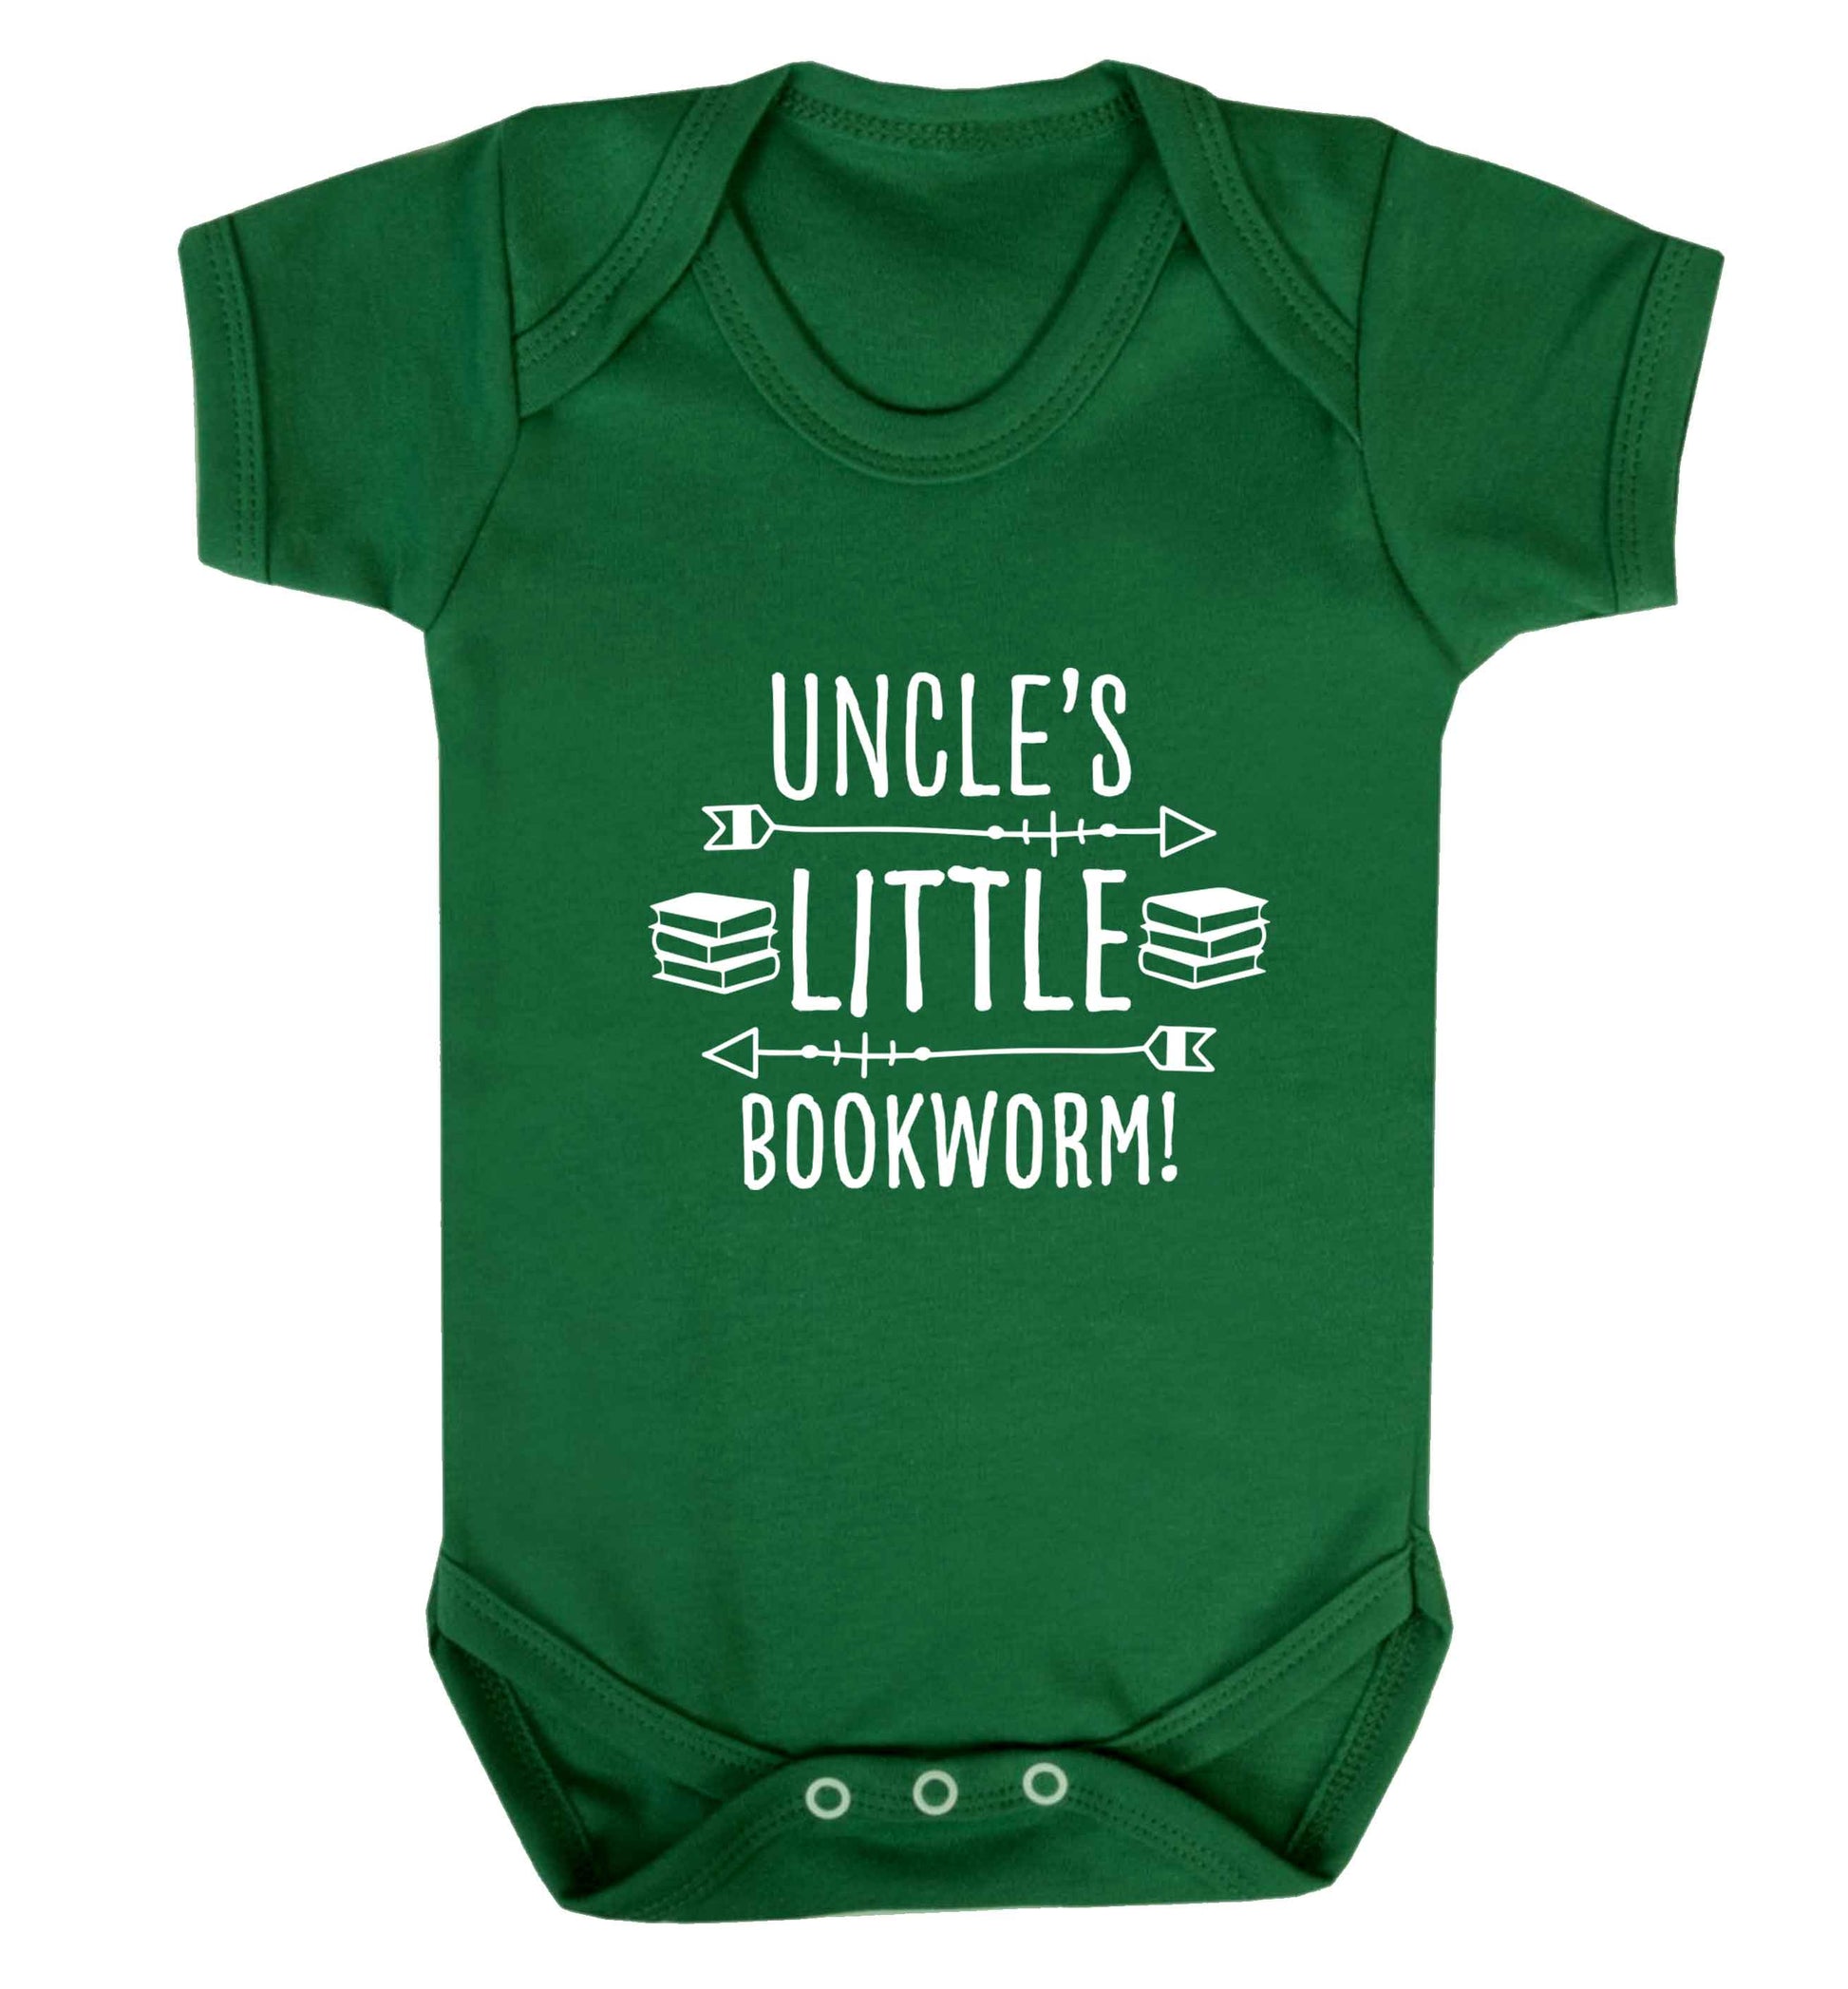 Uncle's little bookworm baby vest green 18-24 months